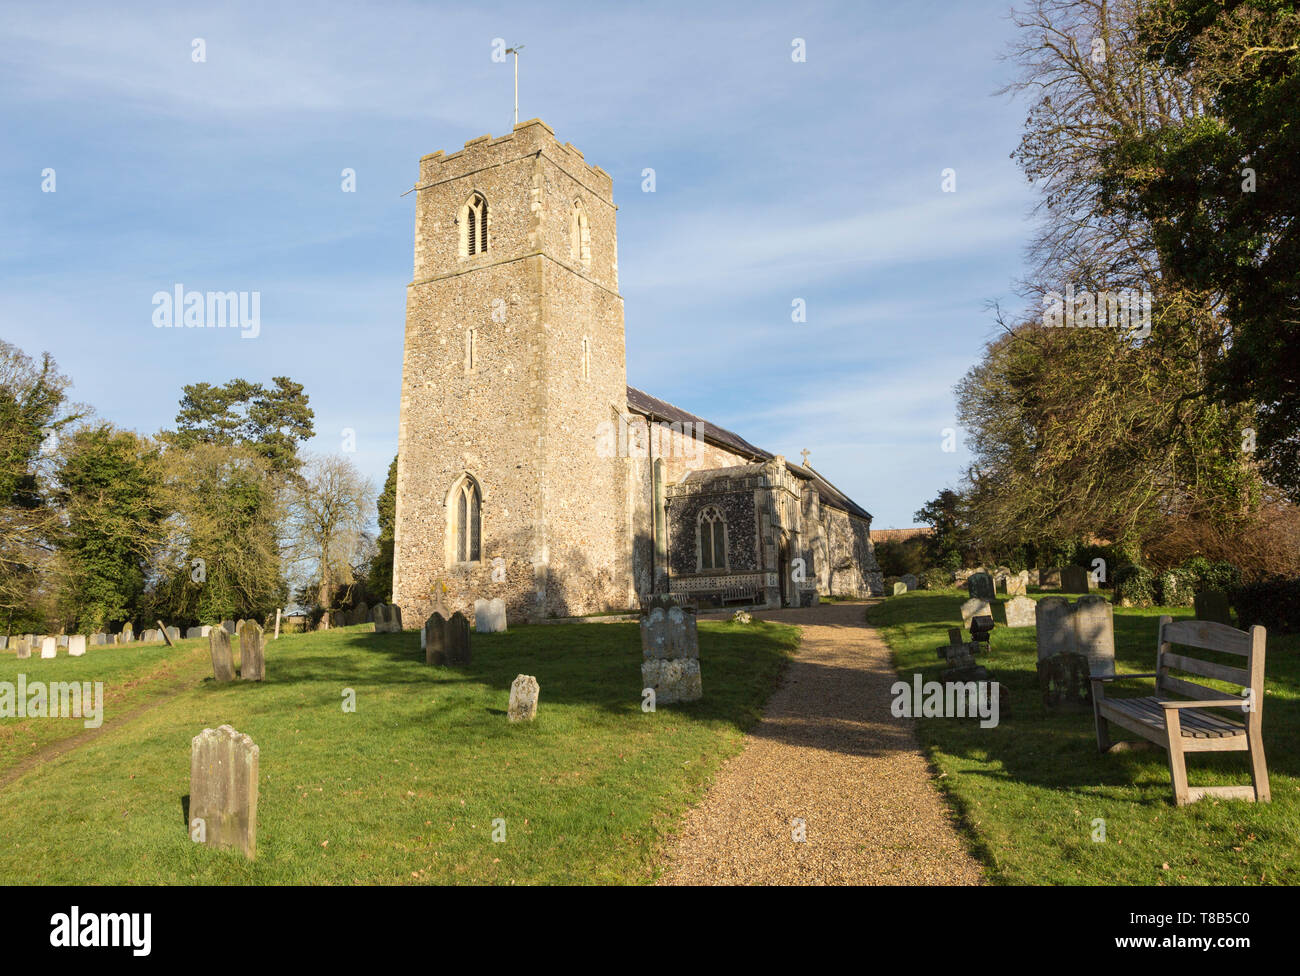 Village parish church and graveyard, Saint John the Baptist, Badingham, Suffolk, England, UK Stock Photo